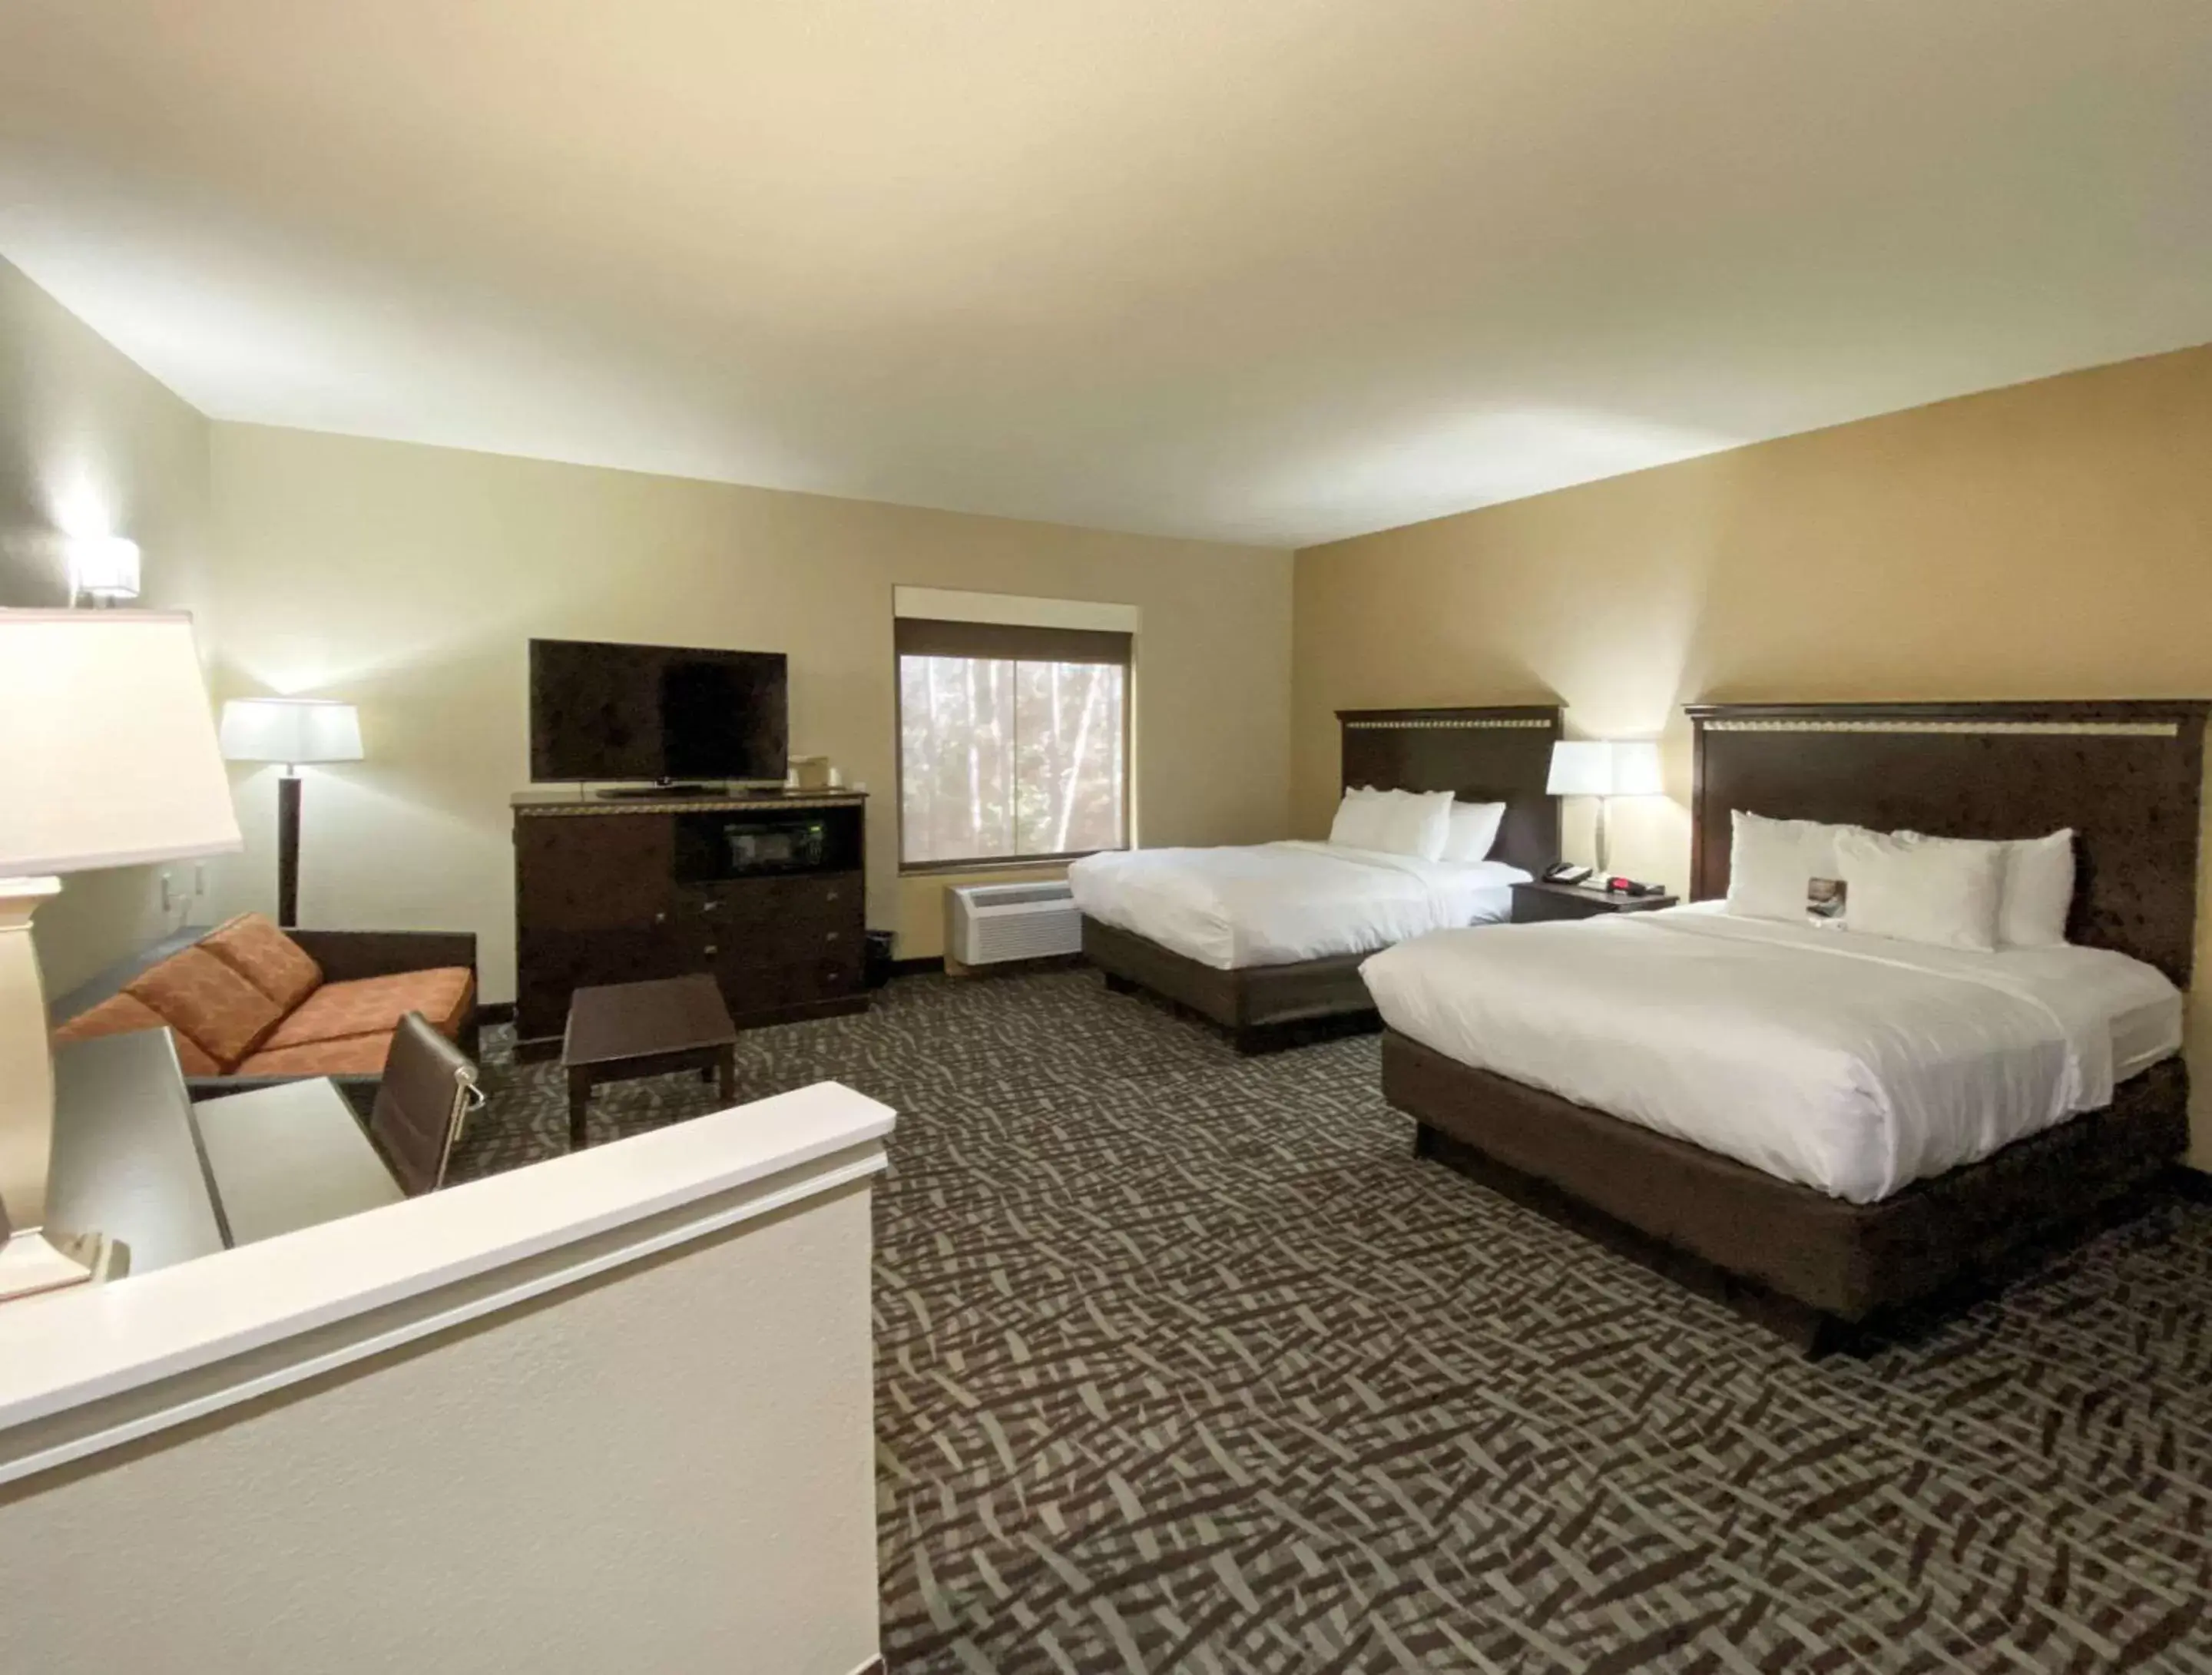 Bedroom in Comfort Suites by Choice Hotels, Kingsland, I-95, Kings Bay Naval Base